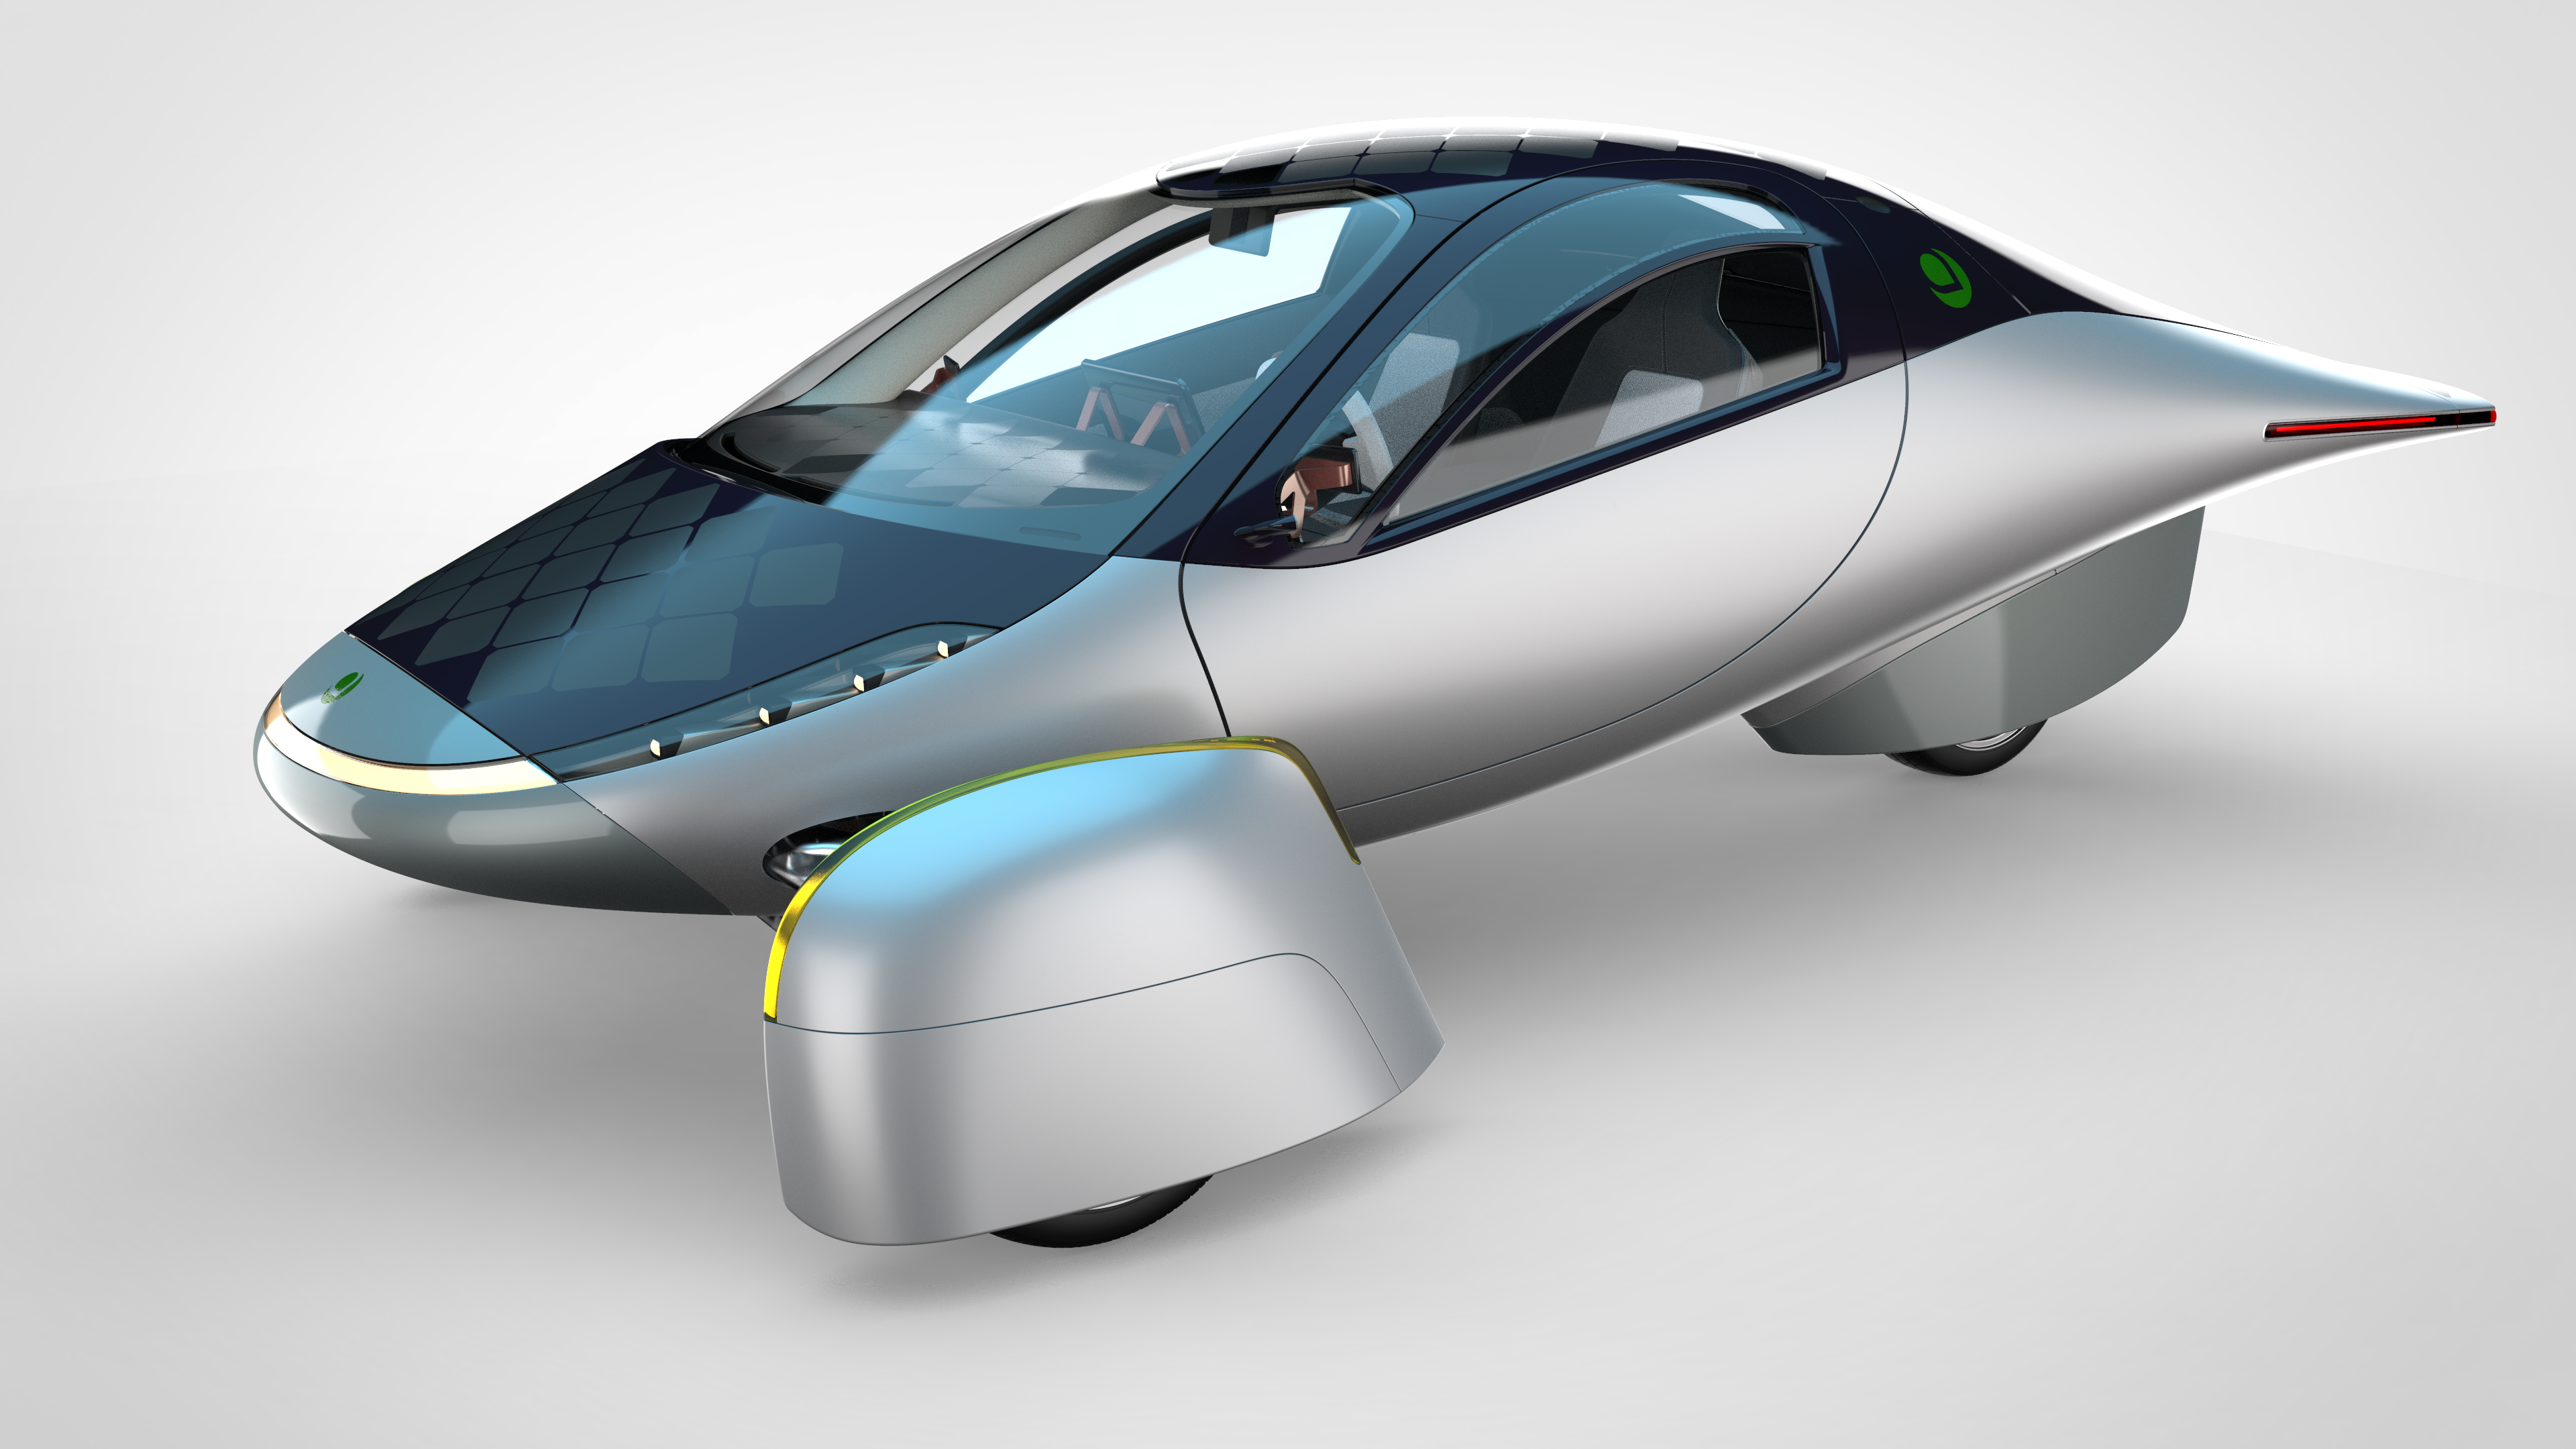 This futuristic electric vehicle promises crazy range